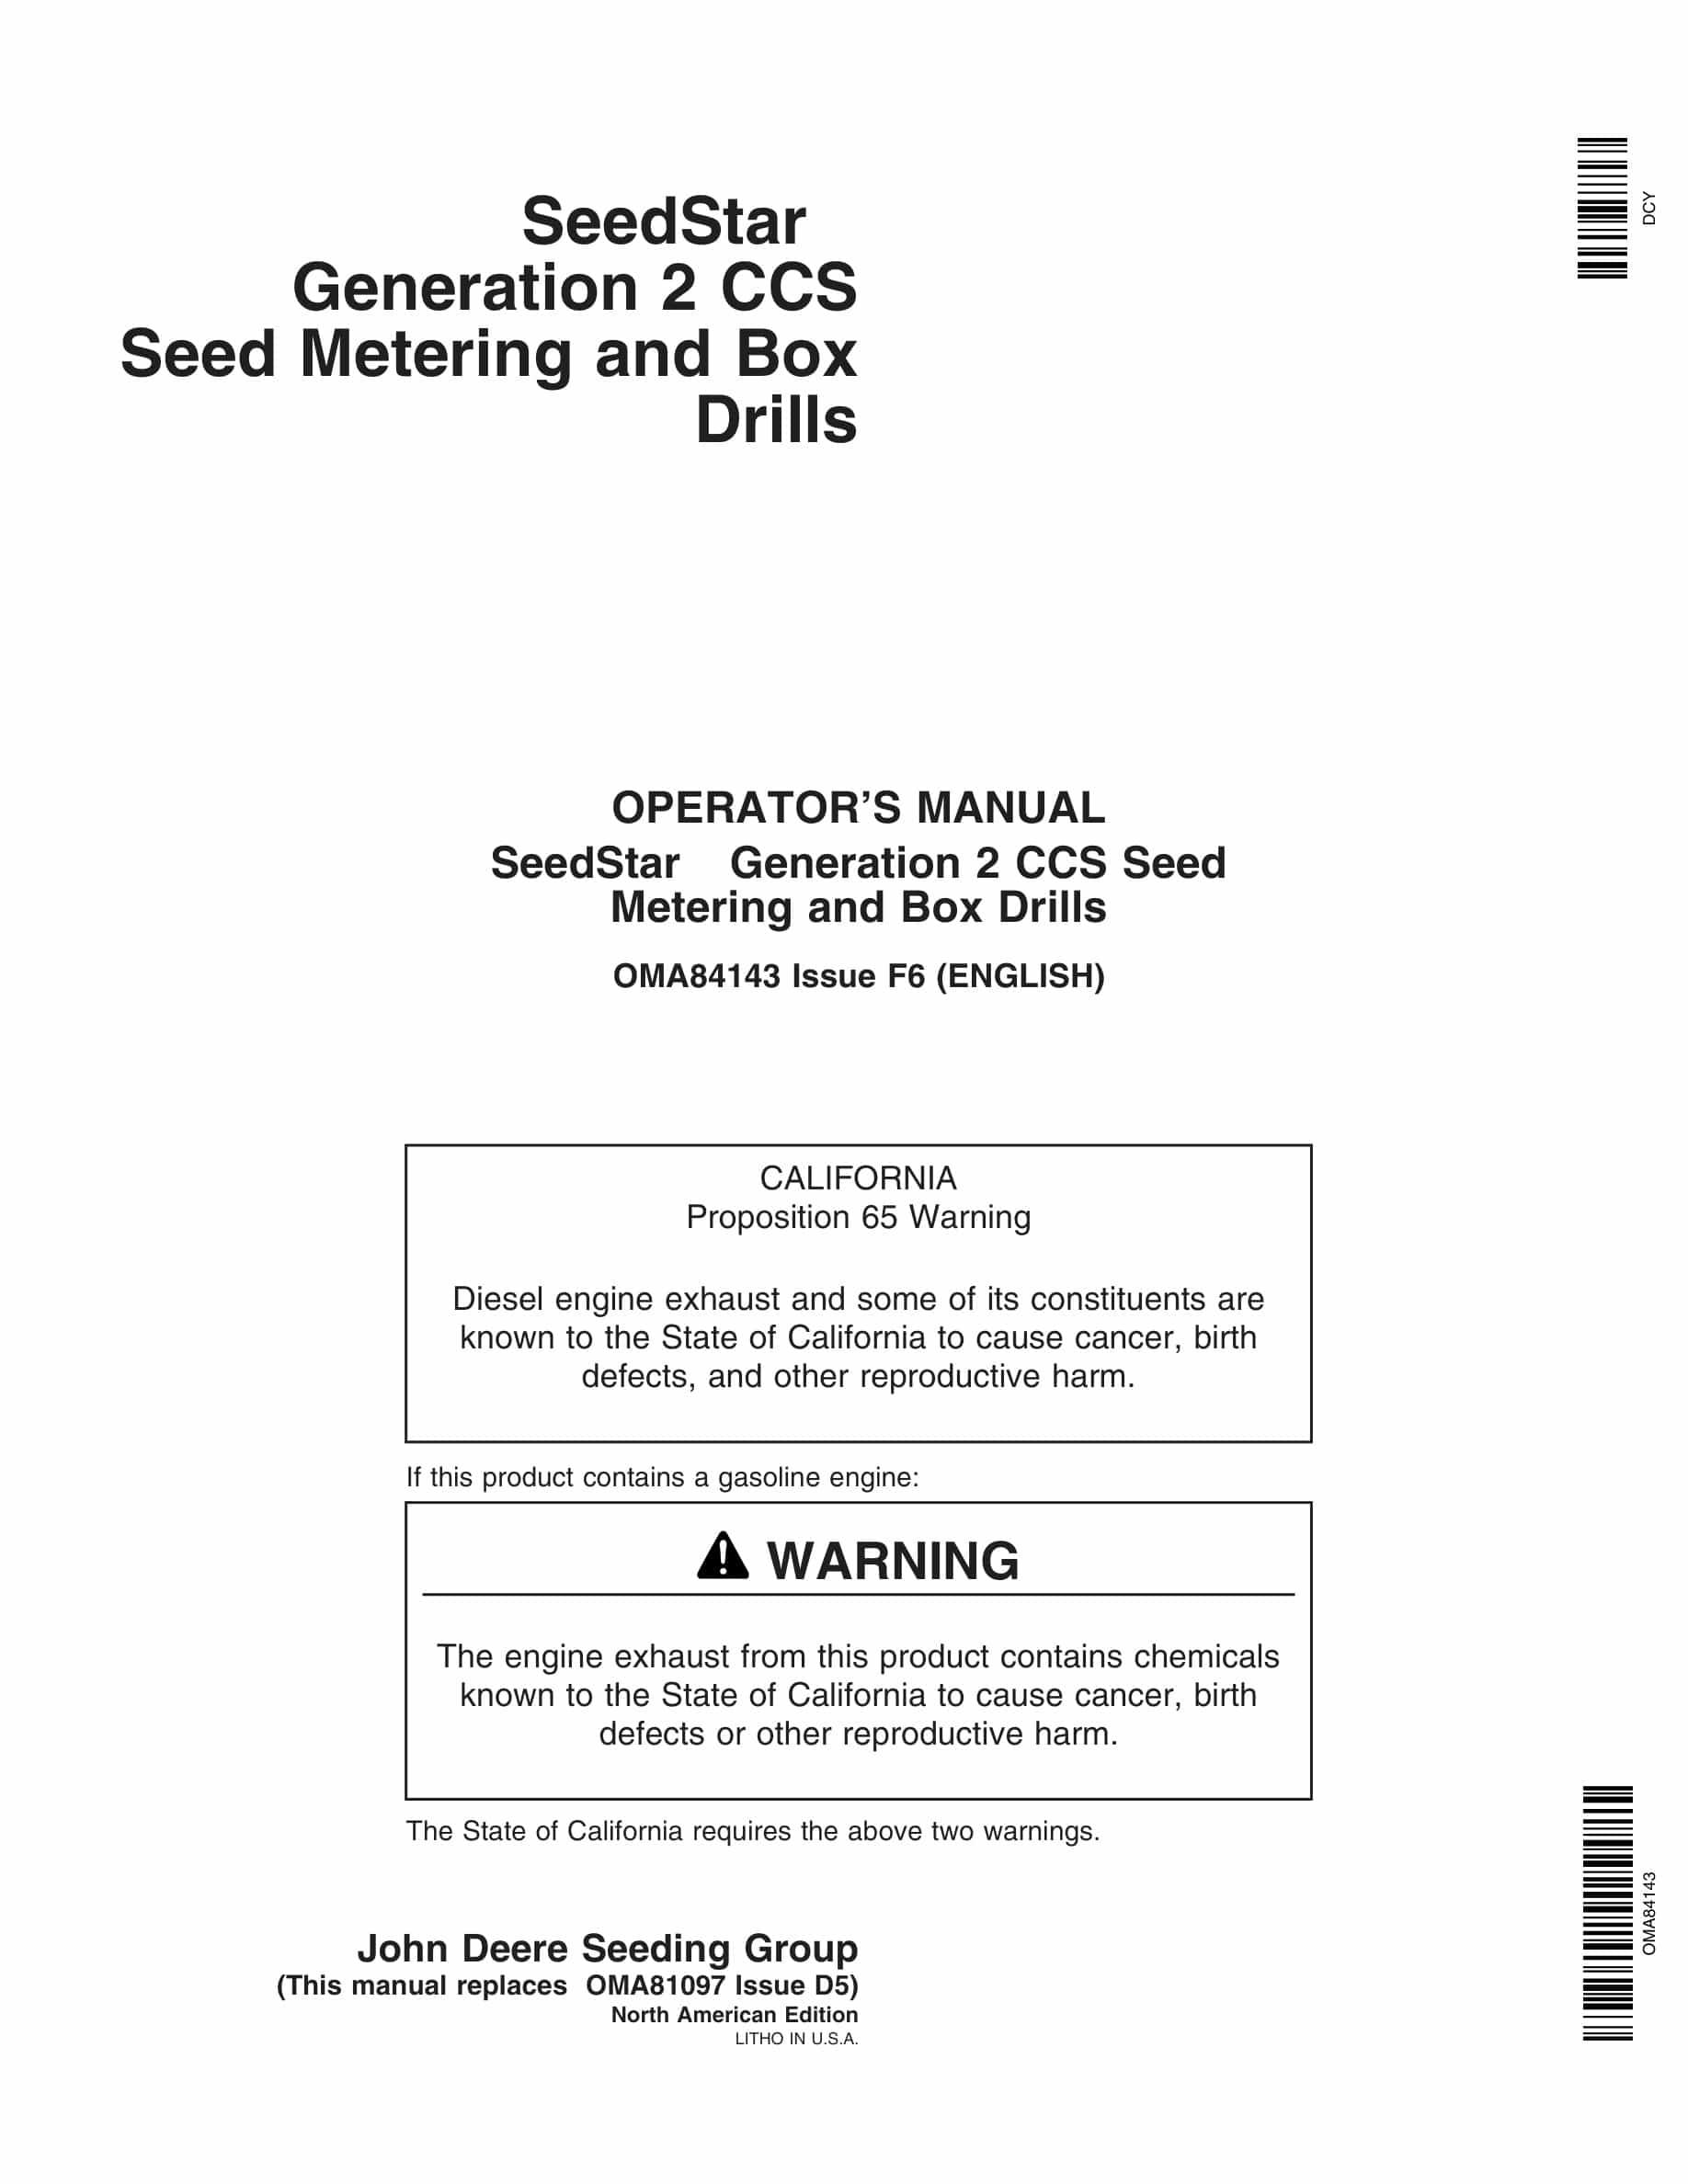 John Deere SeedStar Generation 2 CCS Seed Metering and Box Drill Operator Manual OMA84143-1